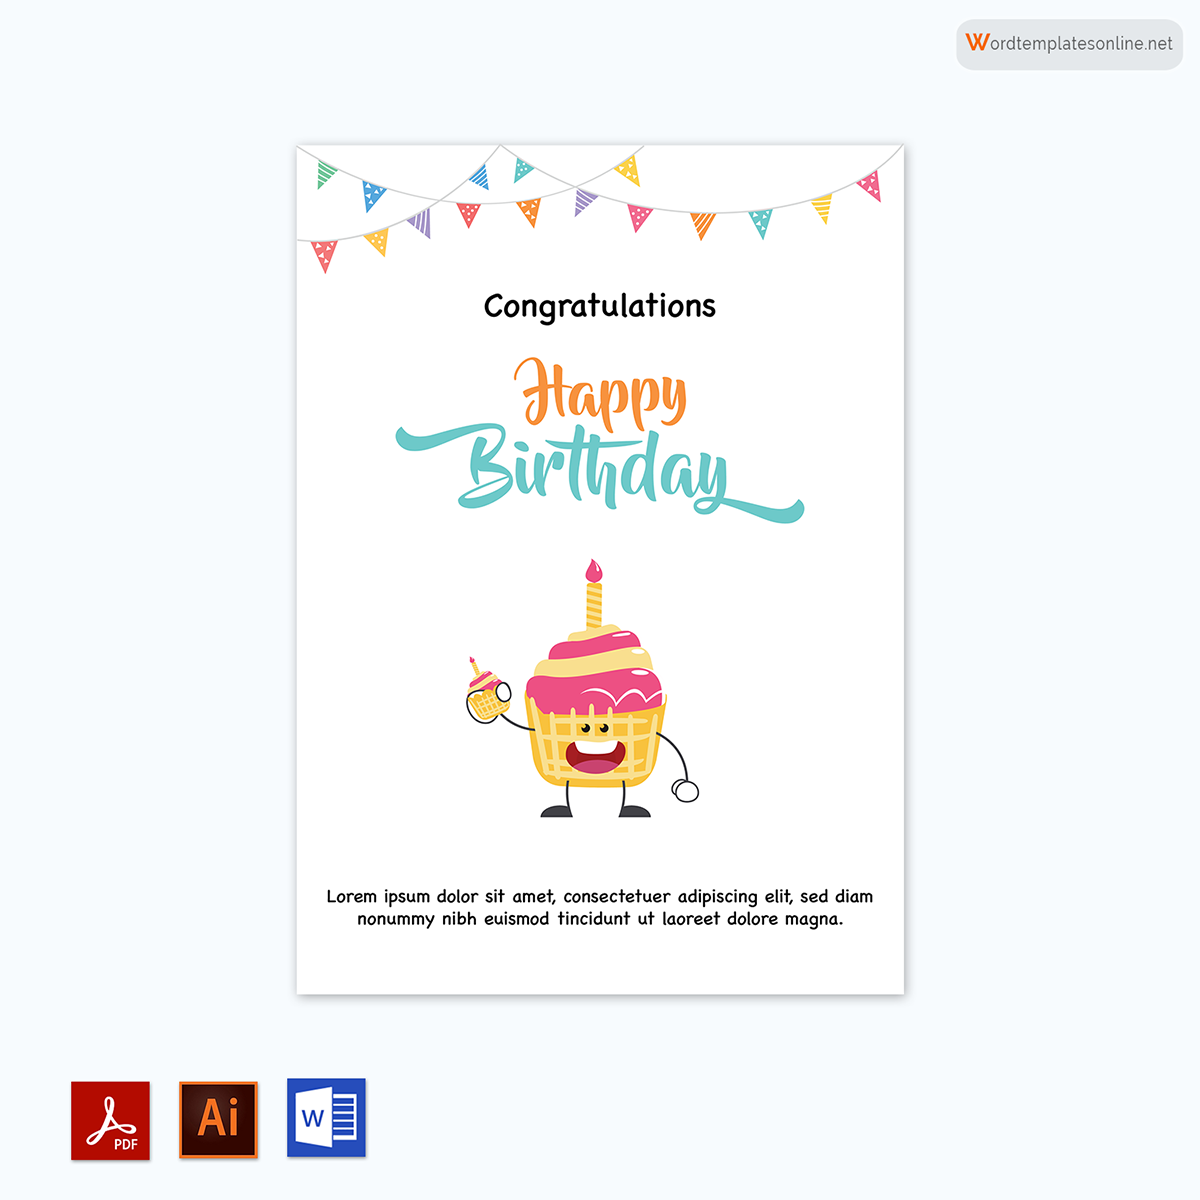 "Editable congratulations card template with Adobe Illustrator"